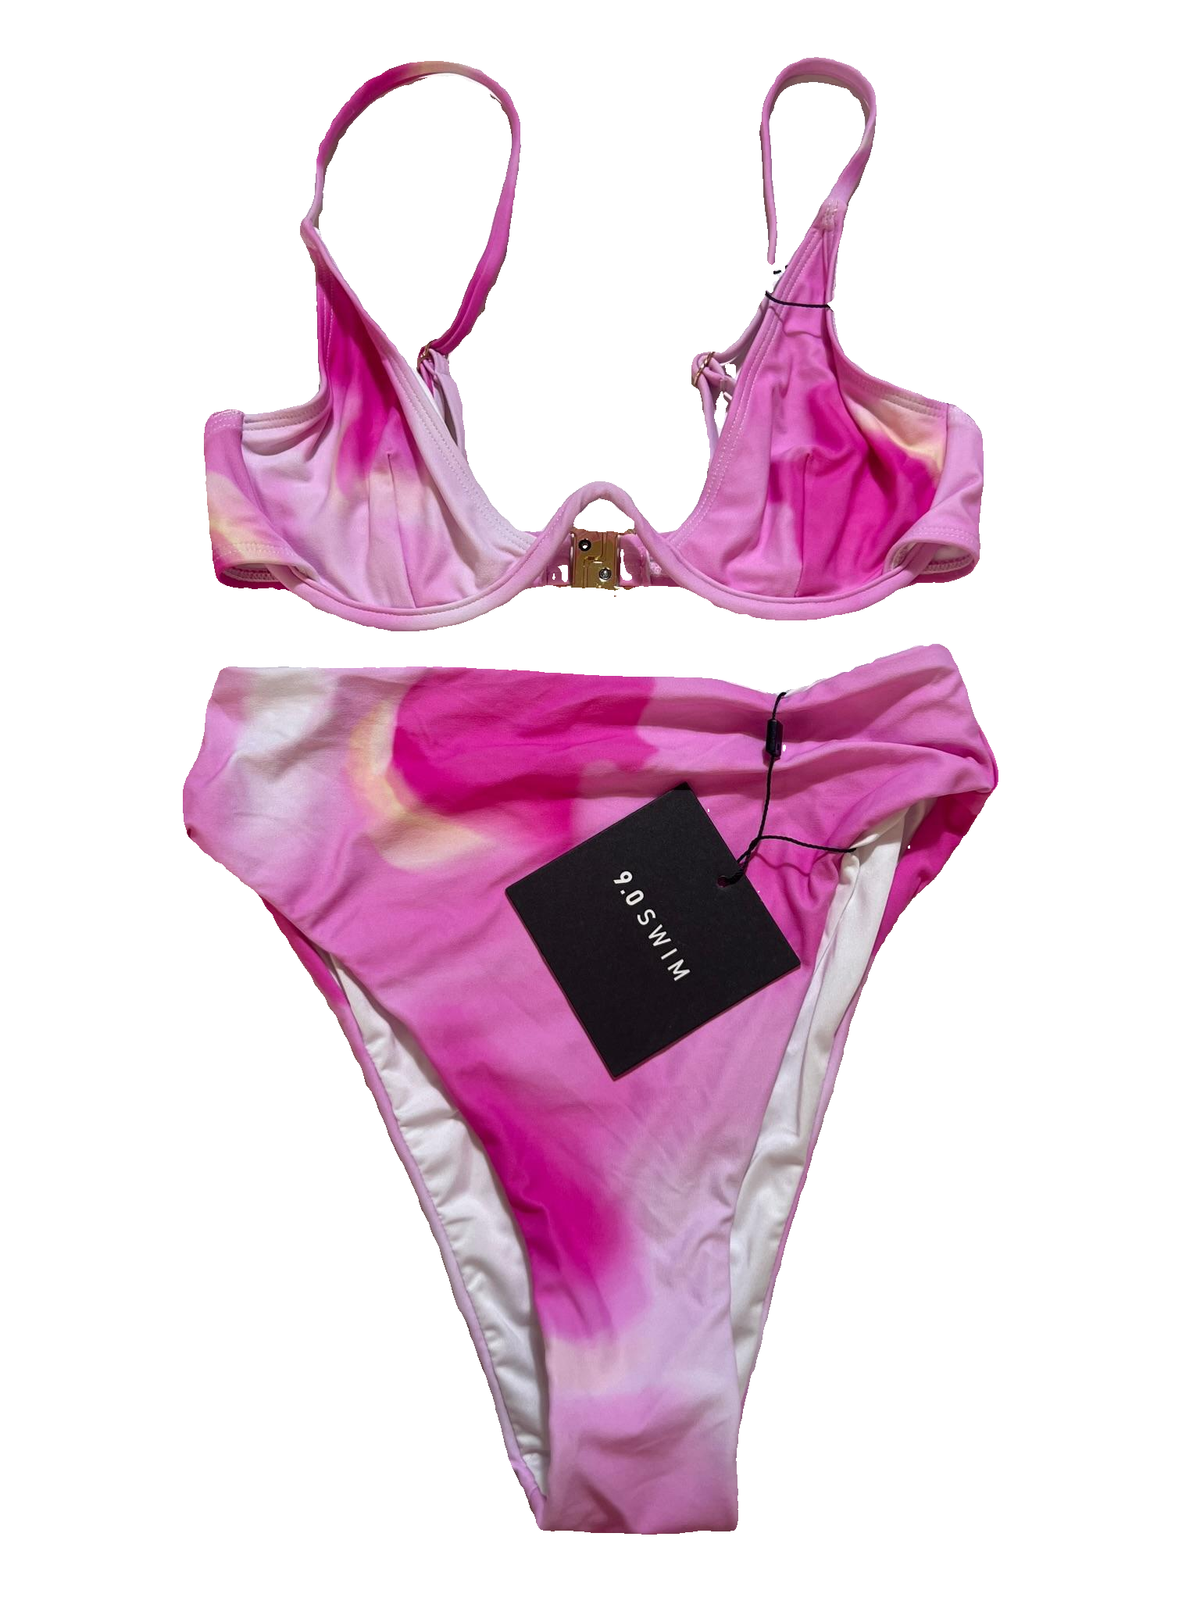 9.0 Swim- Pink Bikini NEW WITH TAGS!